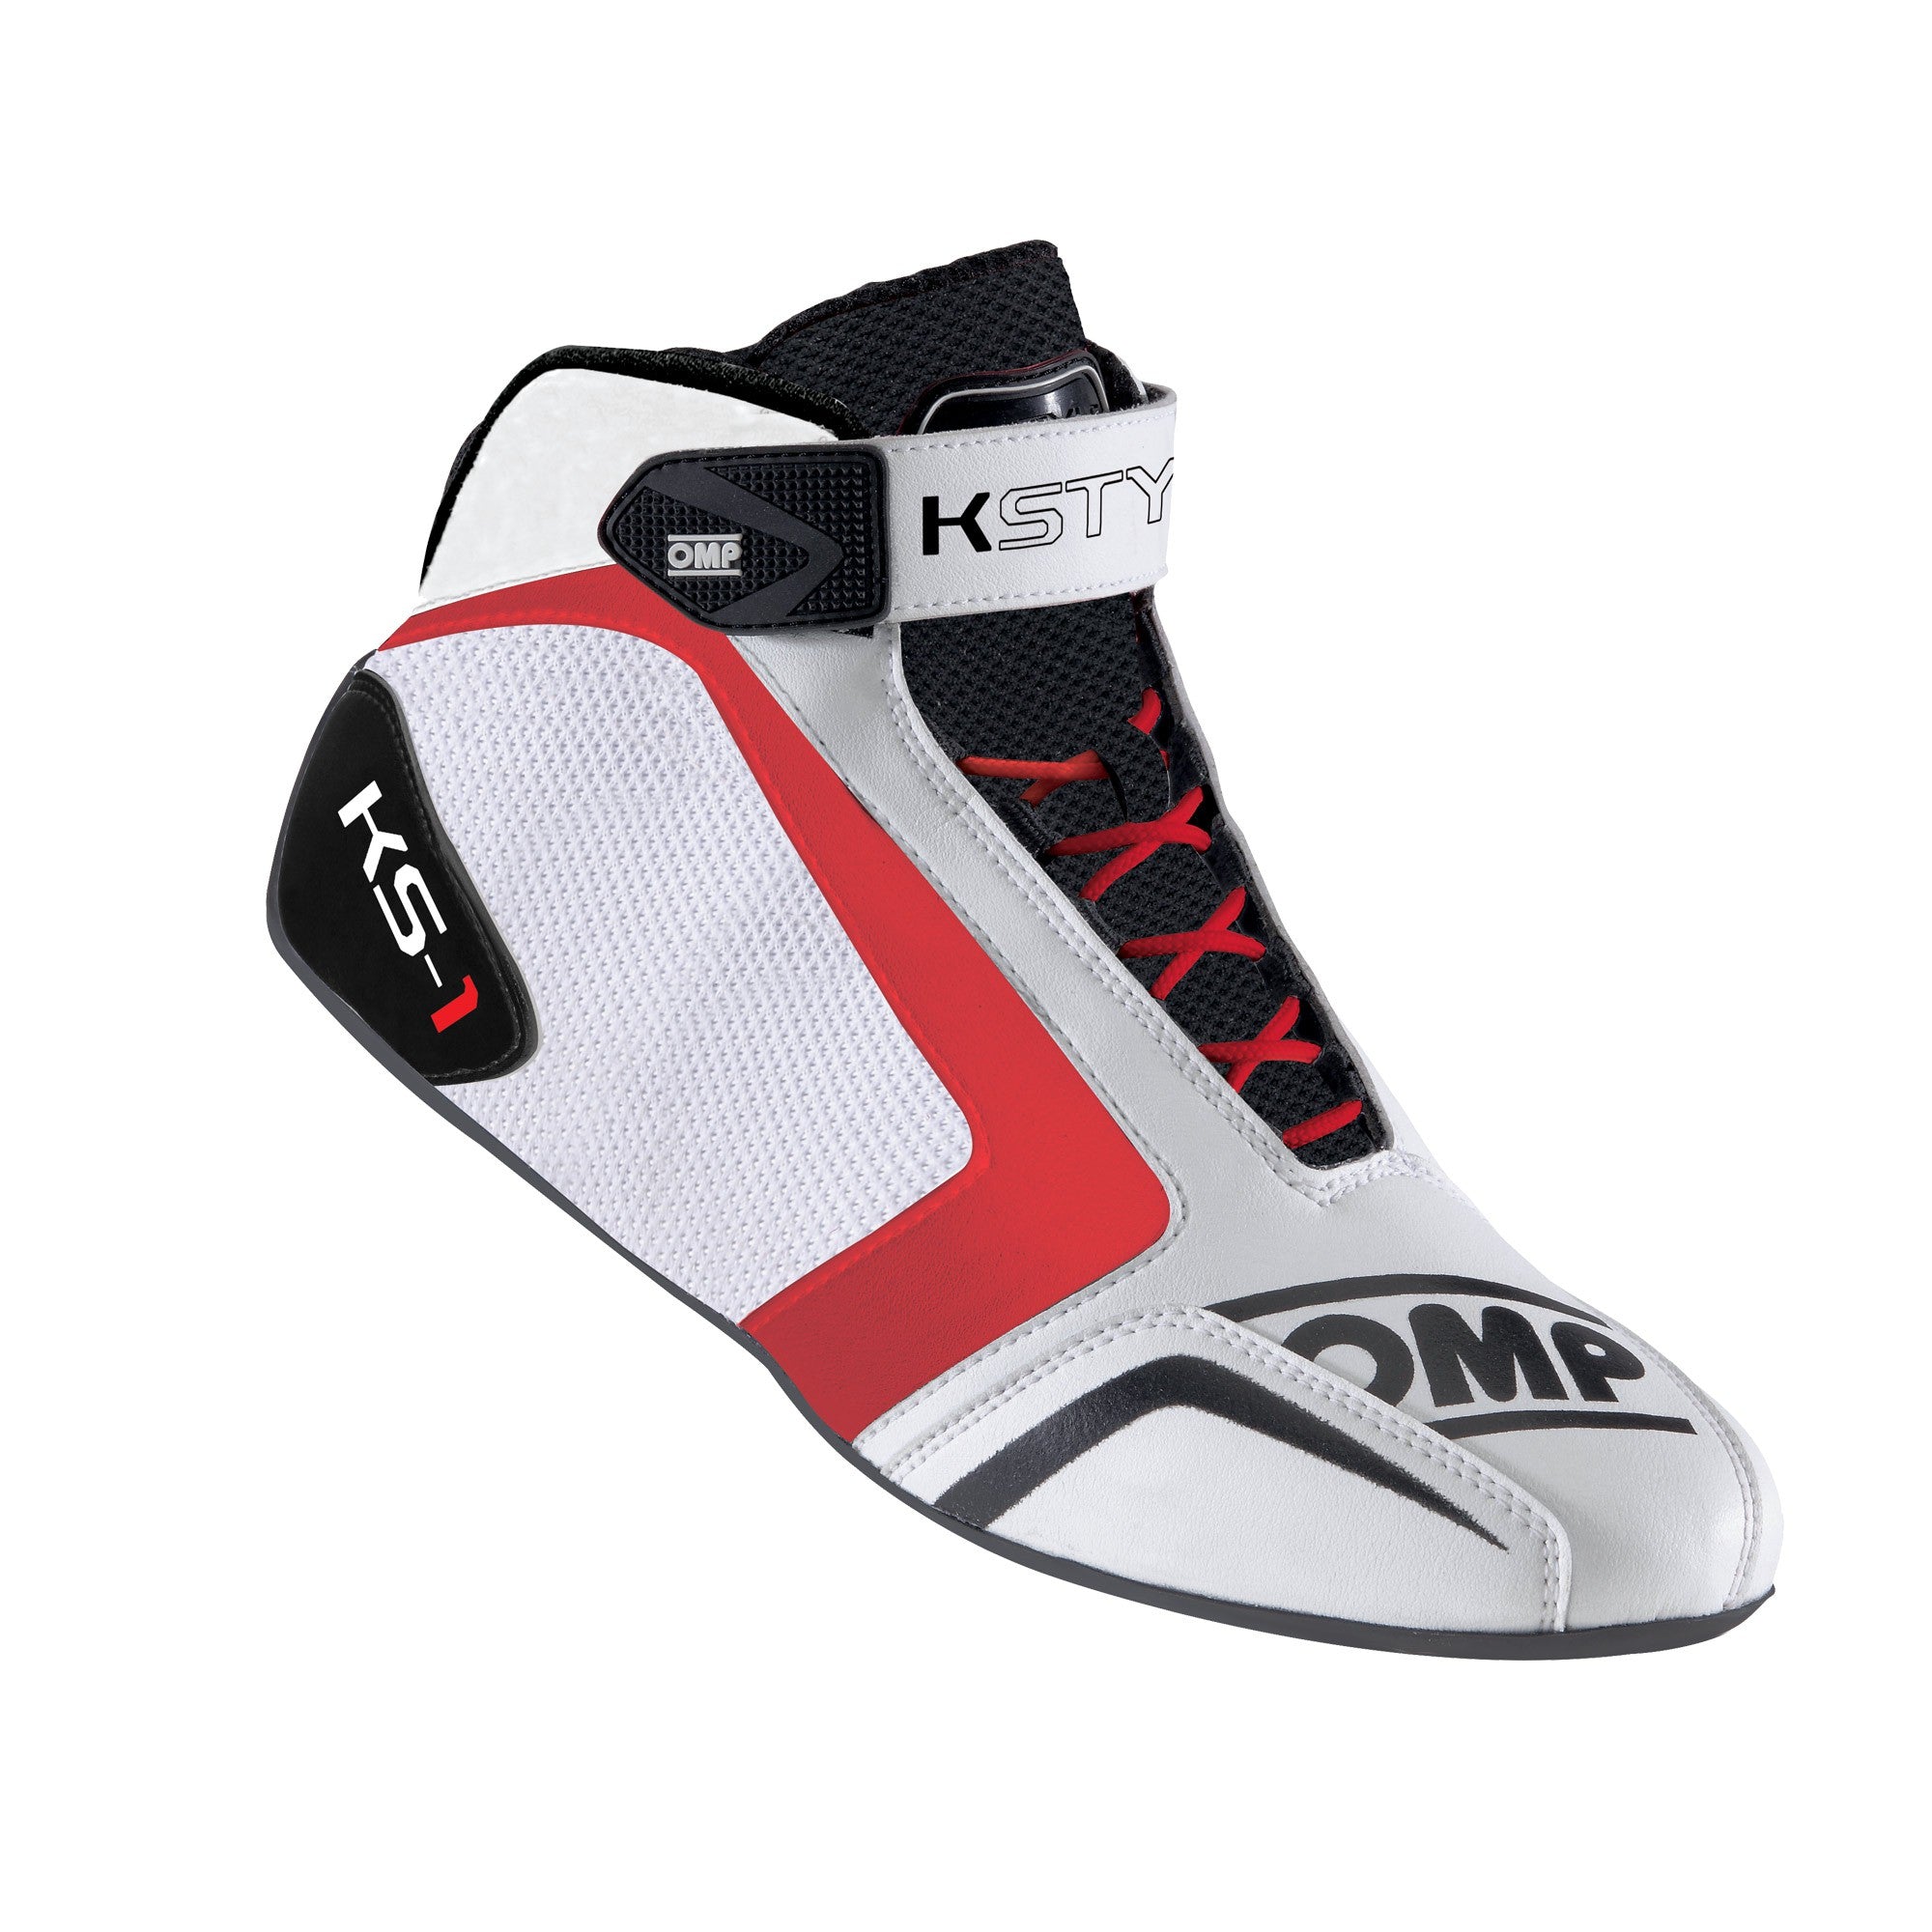 OMP KC0-0815-A01-120-48 (IC/81512048) Kart shoes KS-1, white/black/red, size 48 Photo-0 